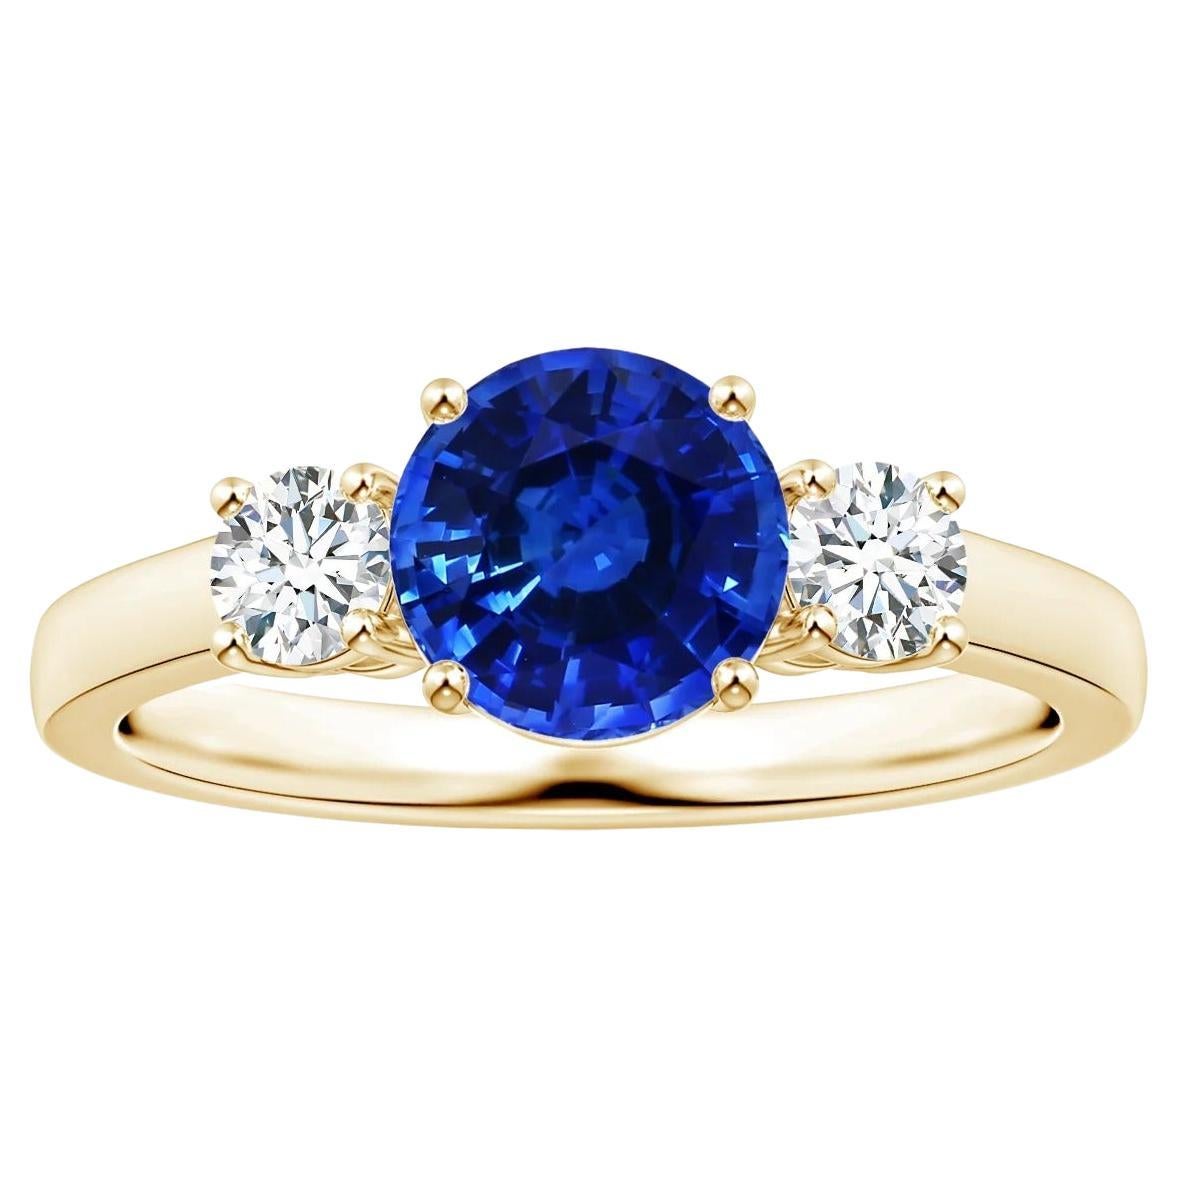 Angara Three Stone Gia Certified Blue Sapphire Ring in Yellow Gold with Diamonds